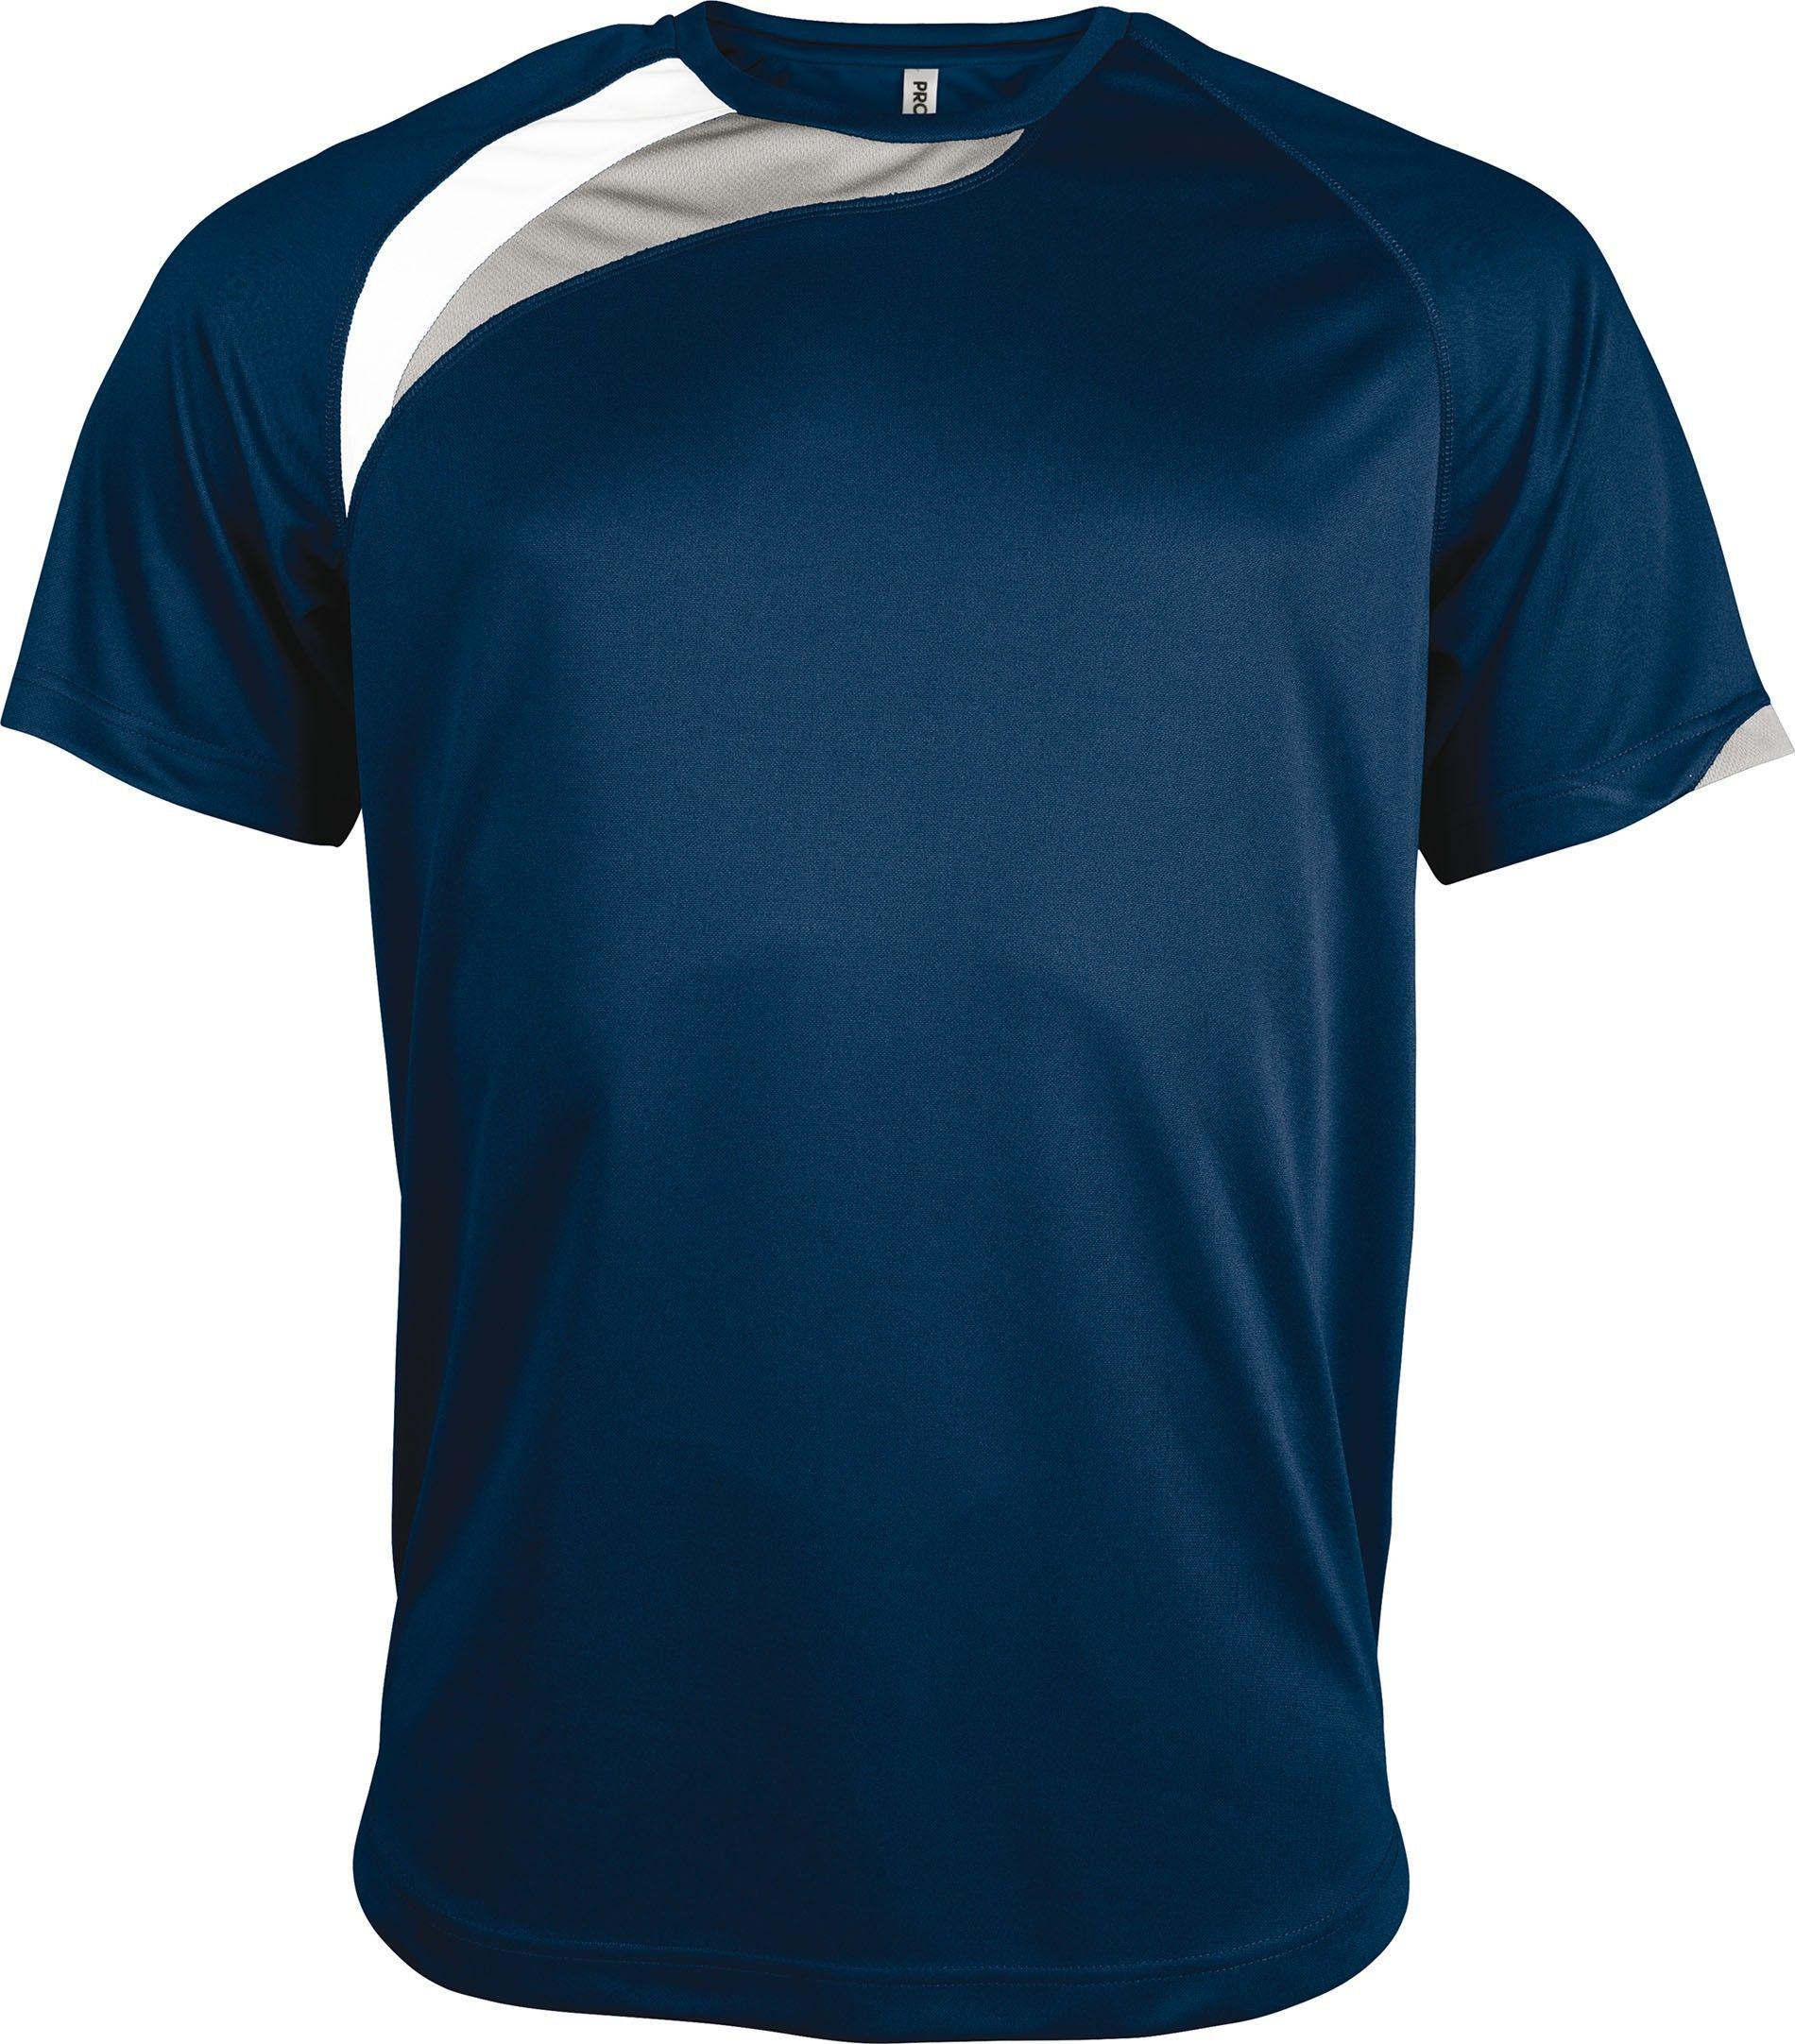 Navy and White Sports Logo - ProAct Shirt Sleeve Sports T Shirt, Sporty Navy White Storm